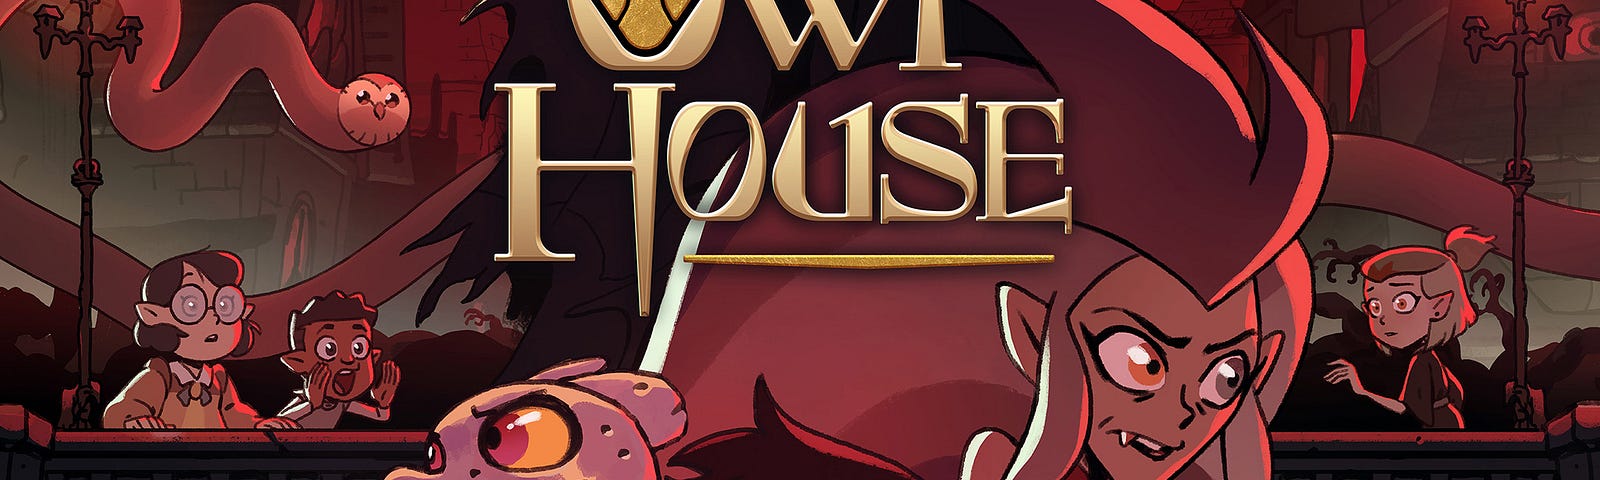 The Owl House Recap: Season 3, Episode Special 1, by Priya Sridhar, Permanent Nerd Network